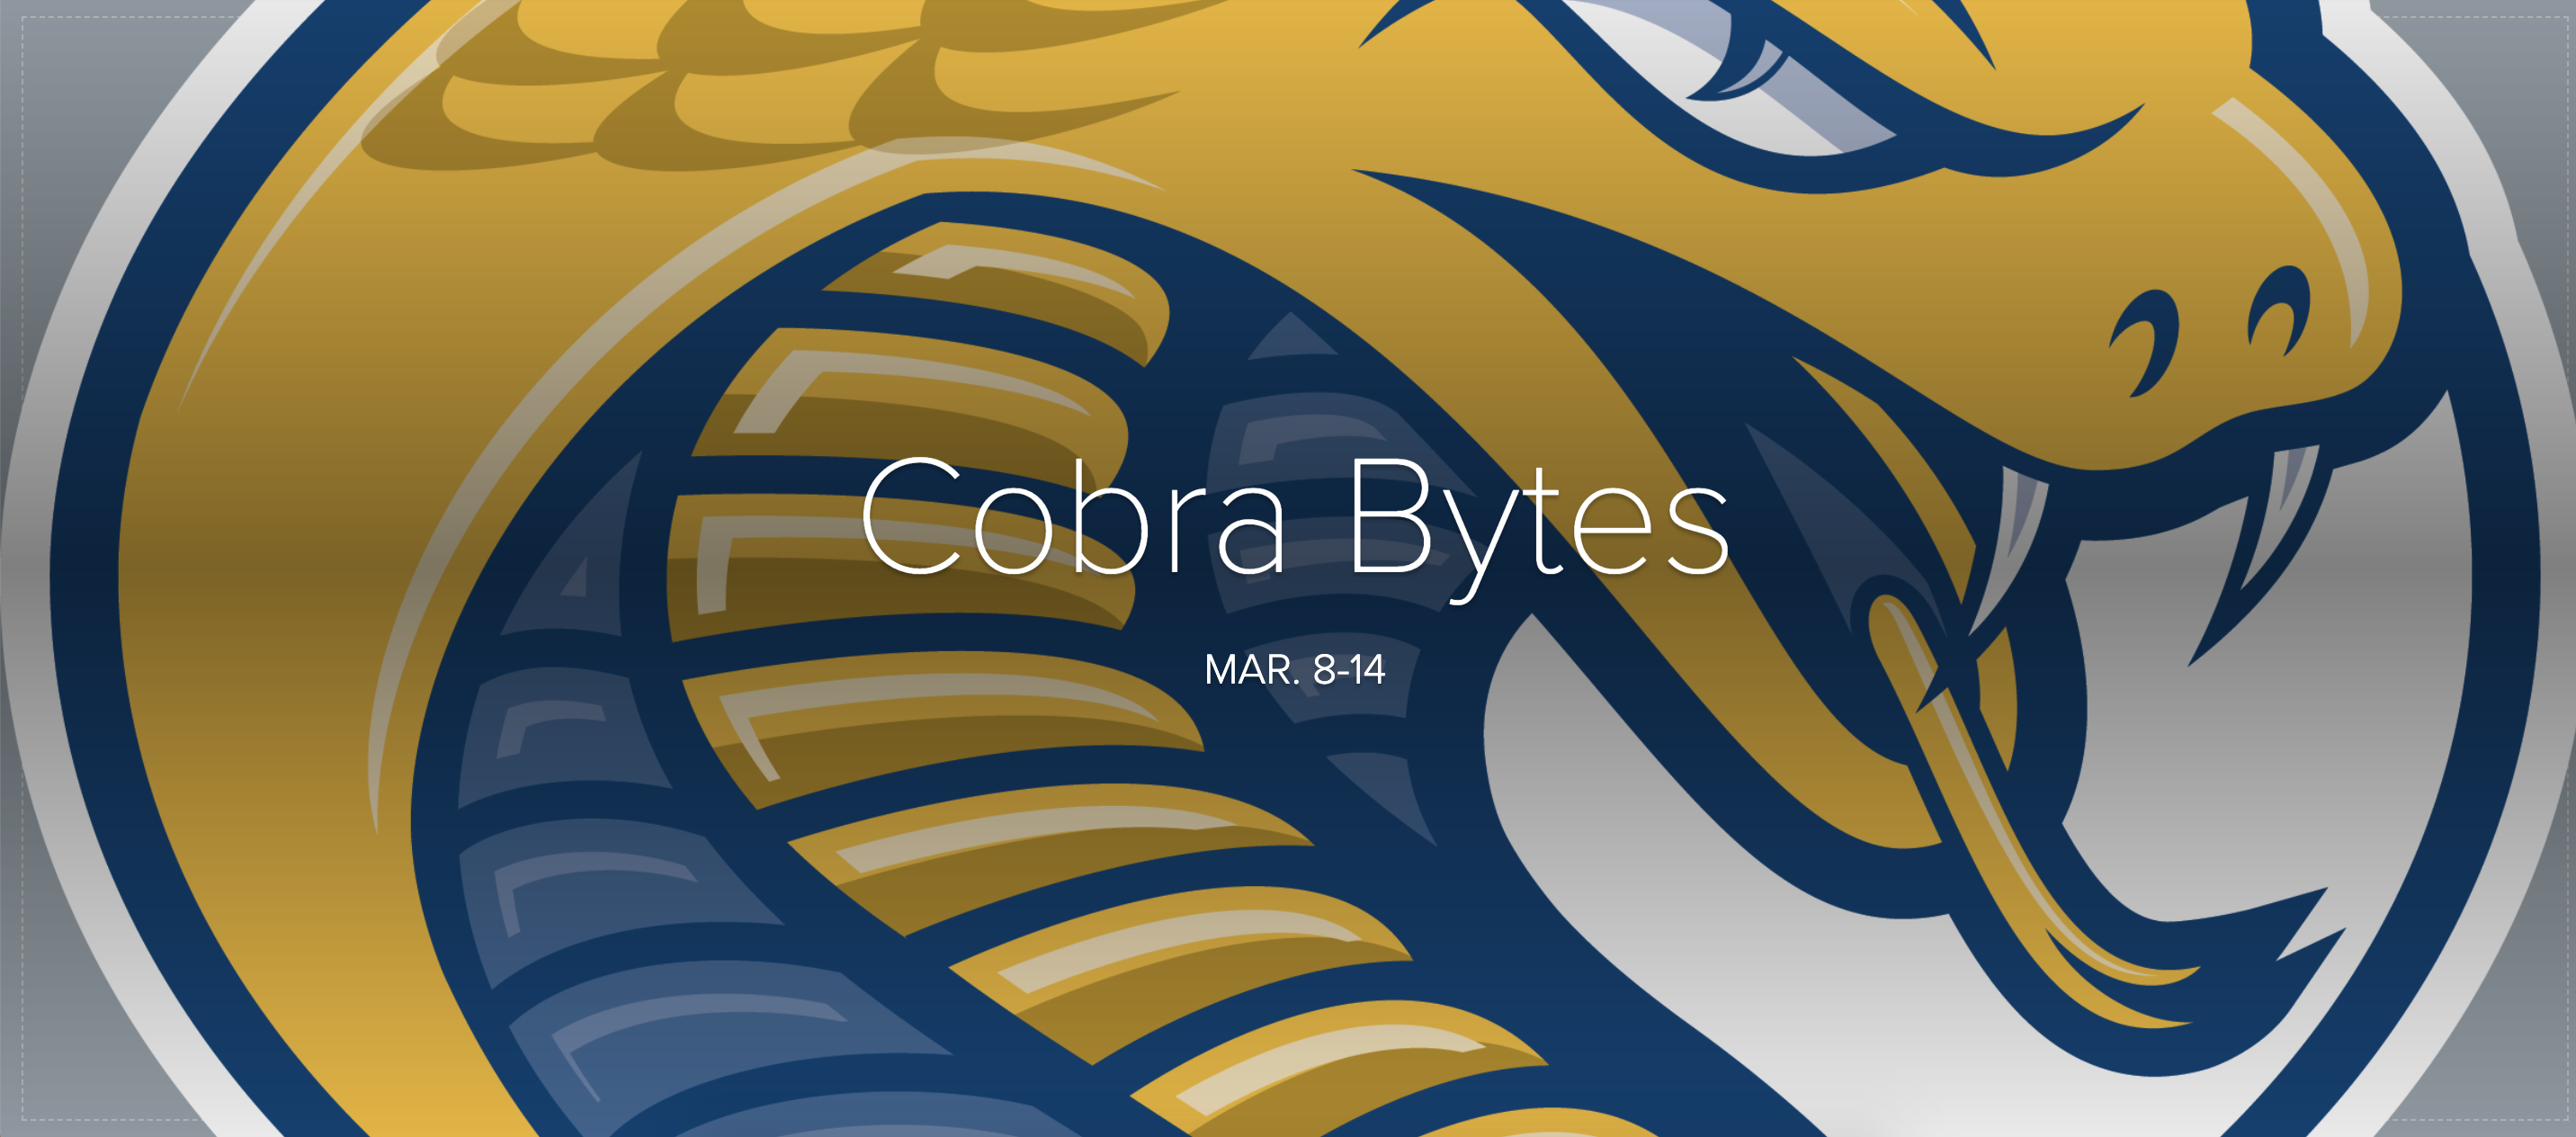 Cobra Bytes Mar. 8-14